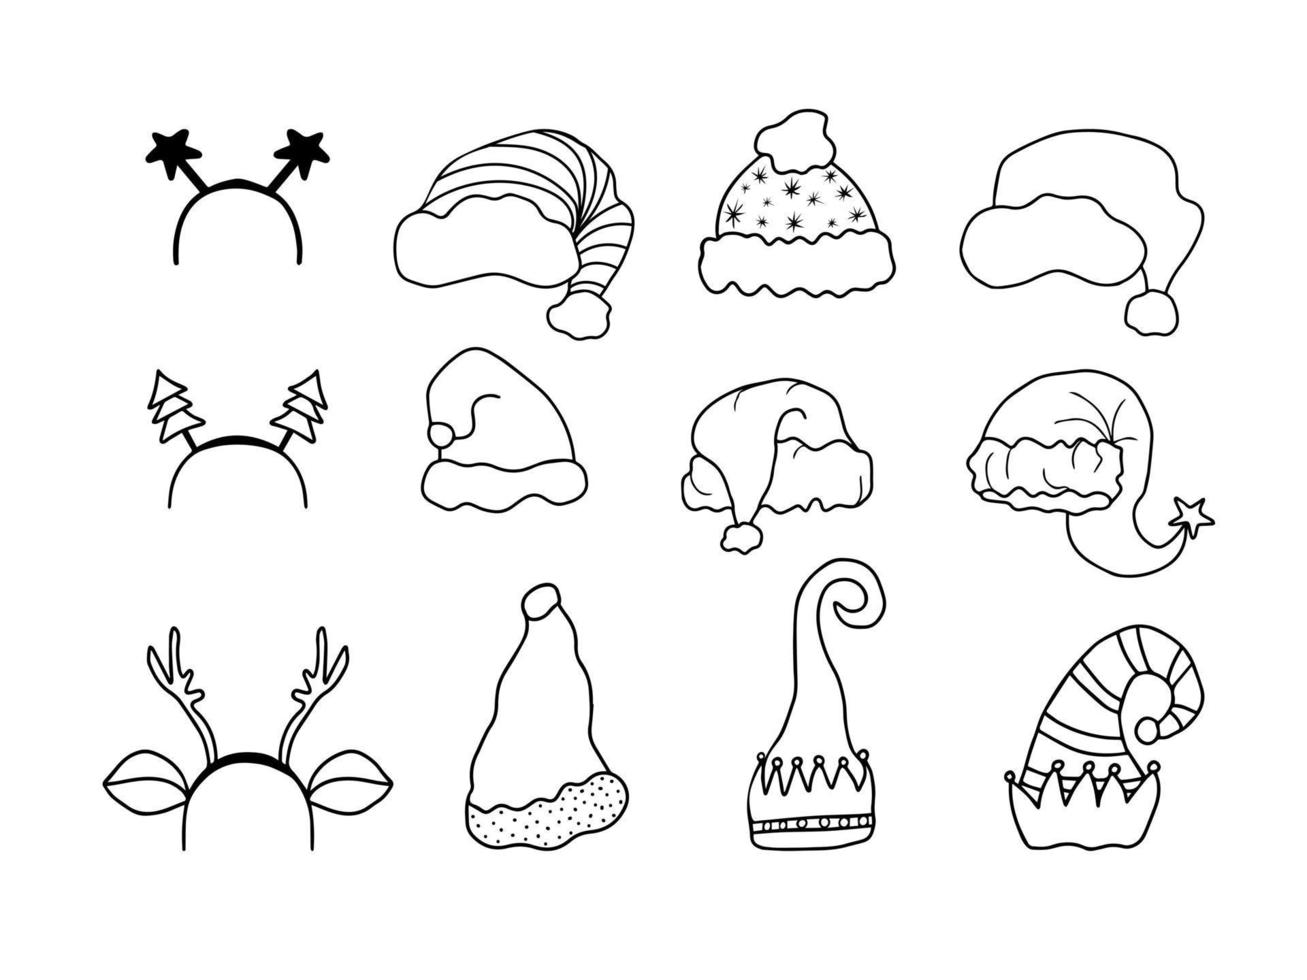 conjunto de chapéus e tiaras de natal desenhados à mão. chapéus de papai noel, chapéus de duende, chifres de rena de brinquedo, tiaras de árvore de natal fofas. isolado no fundo branco vetor